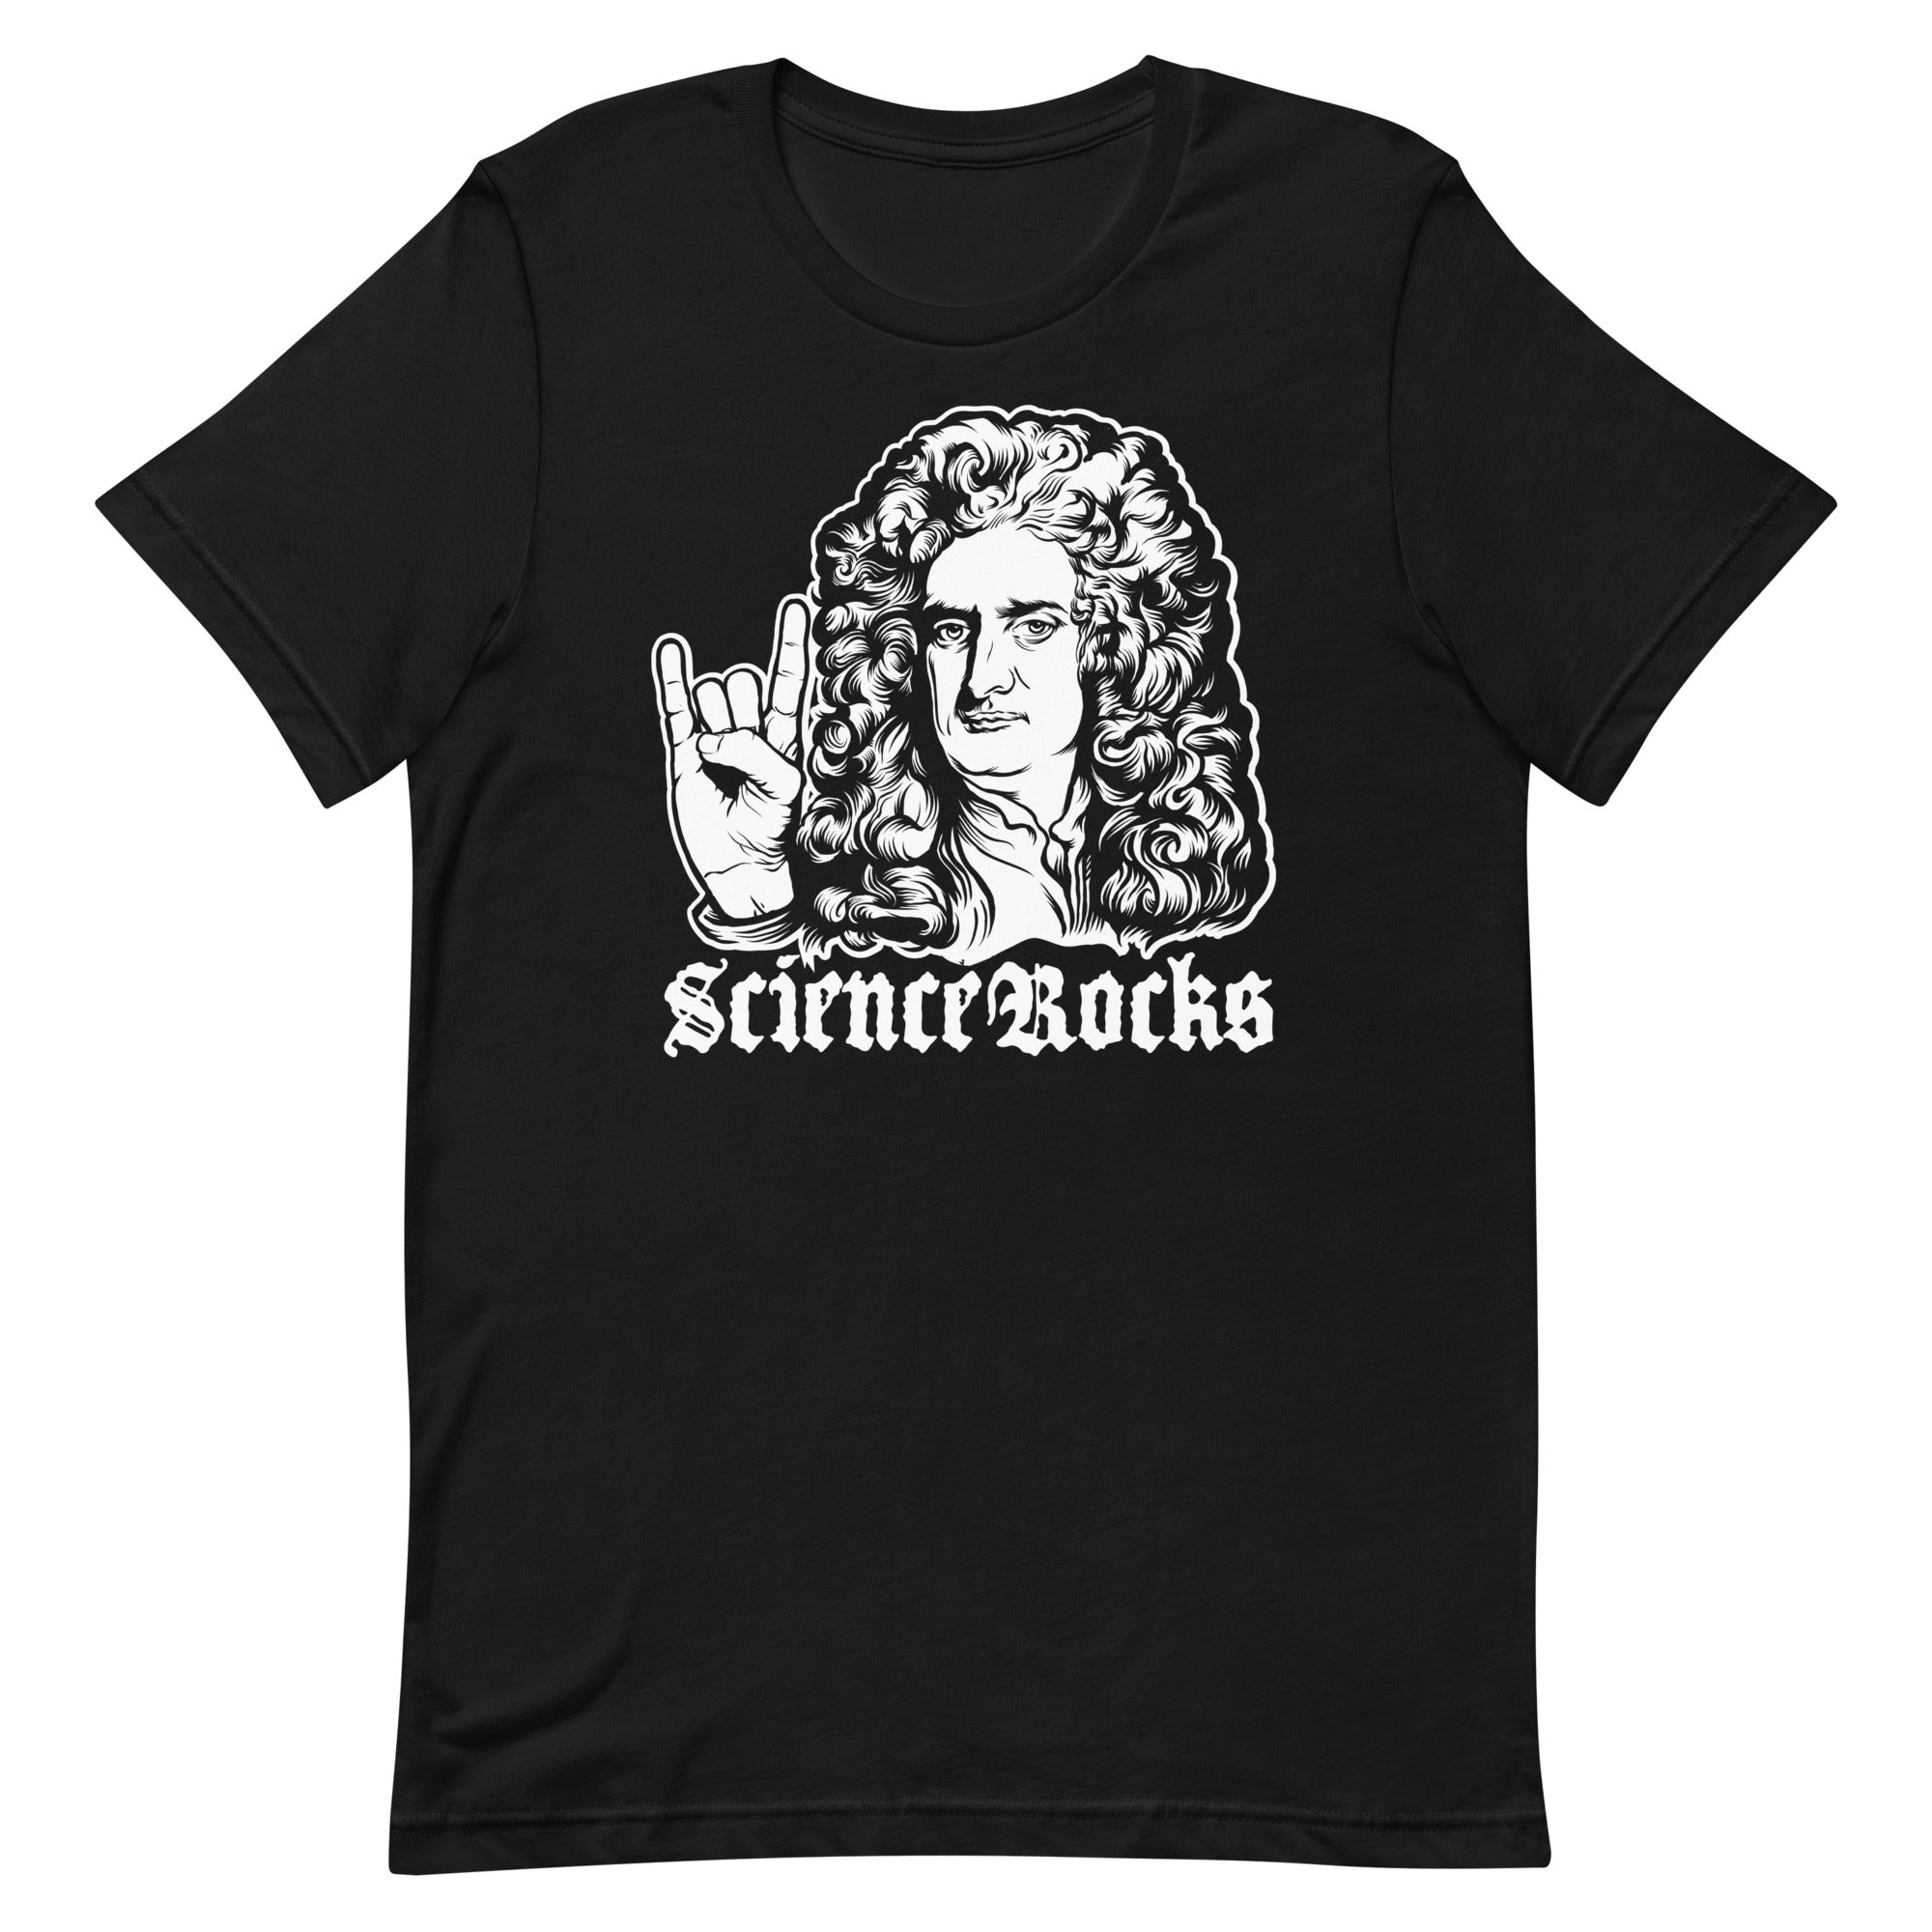 Sir Isaac Newton Science Rocks T-Shirt